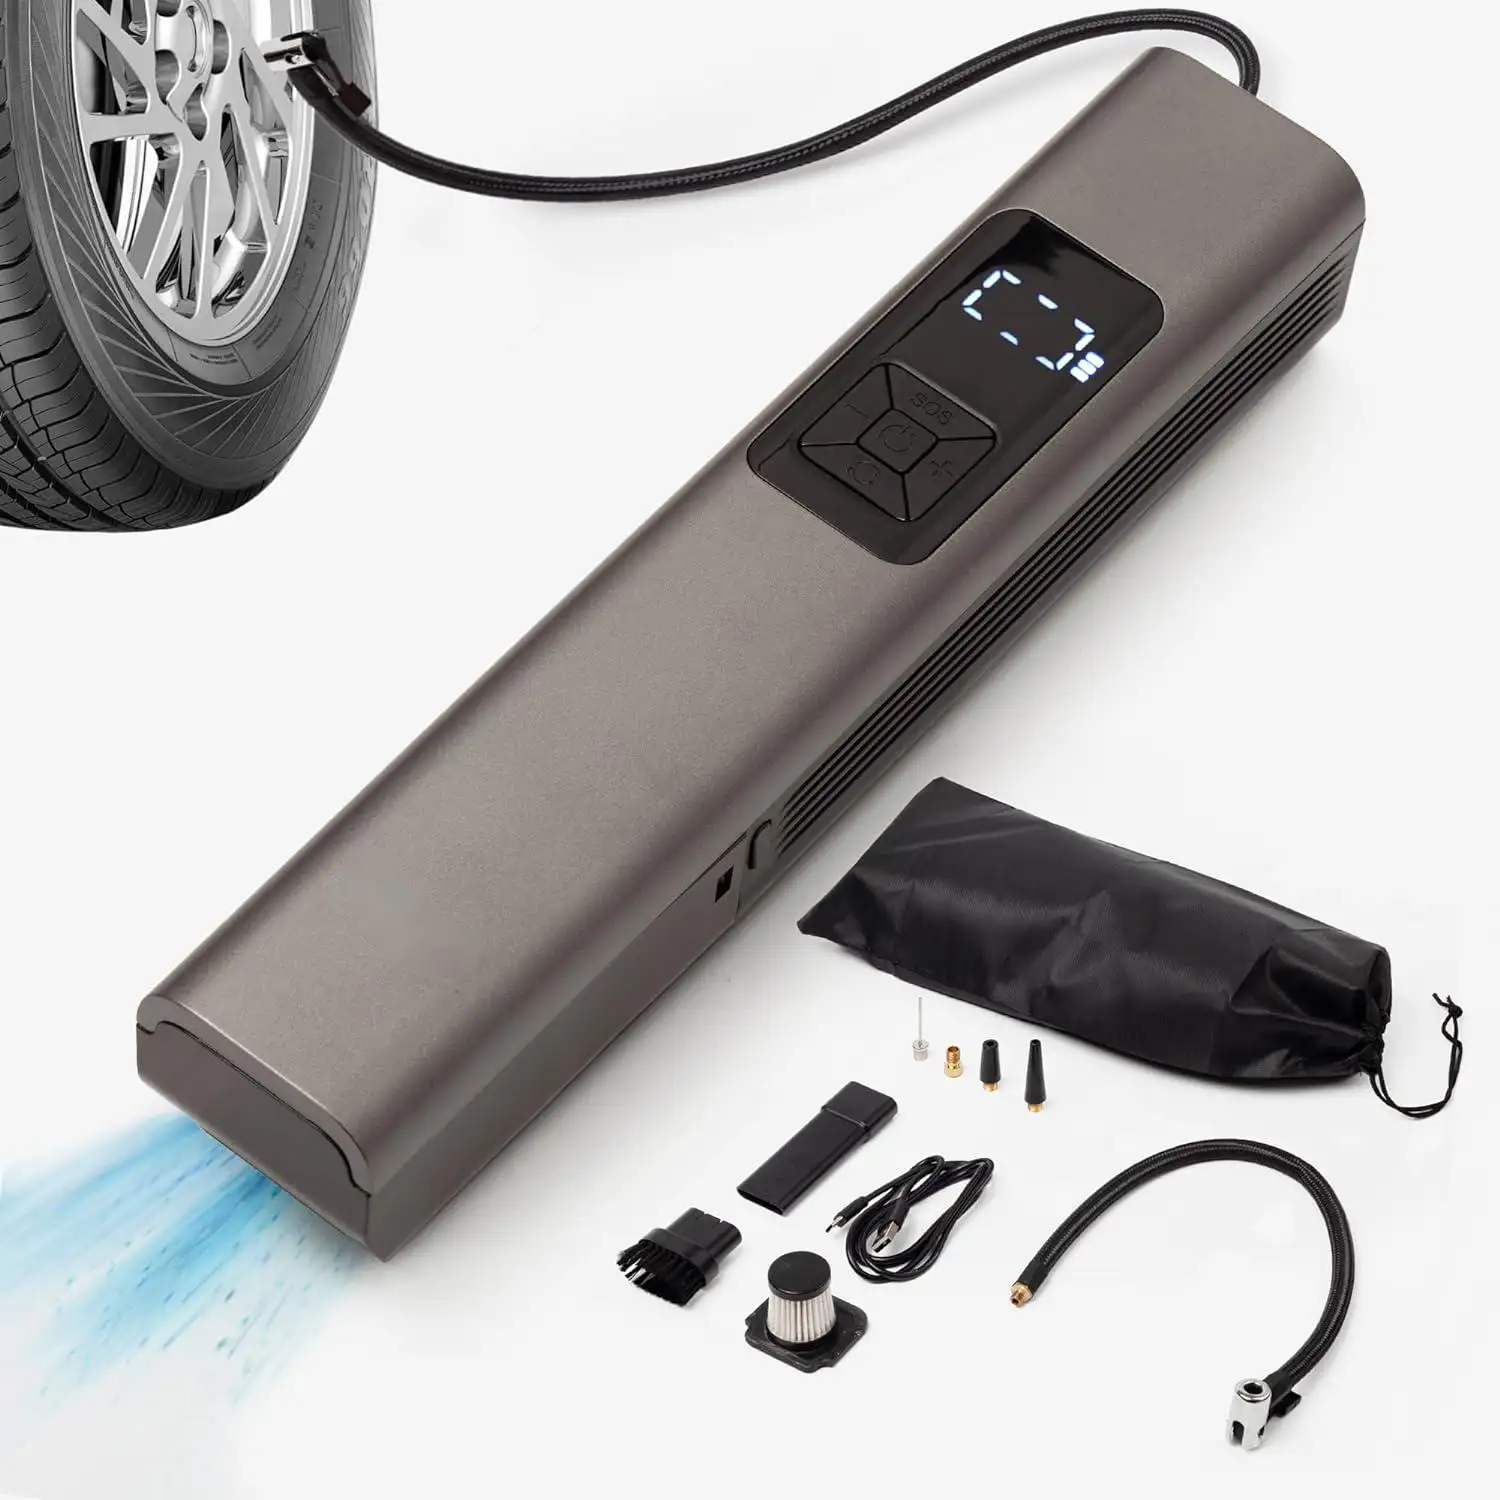 2266 Car Vacuum cleaner Wet-Dry Lightweight Powerful Cyclonic Suction 13kpa Handheld Vacuum